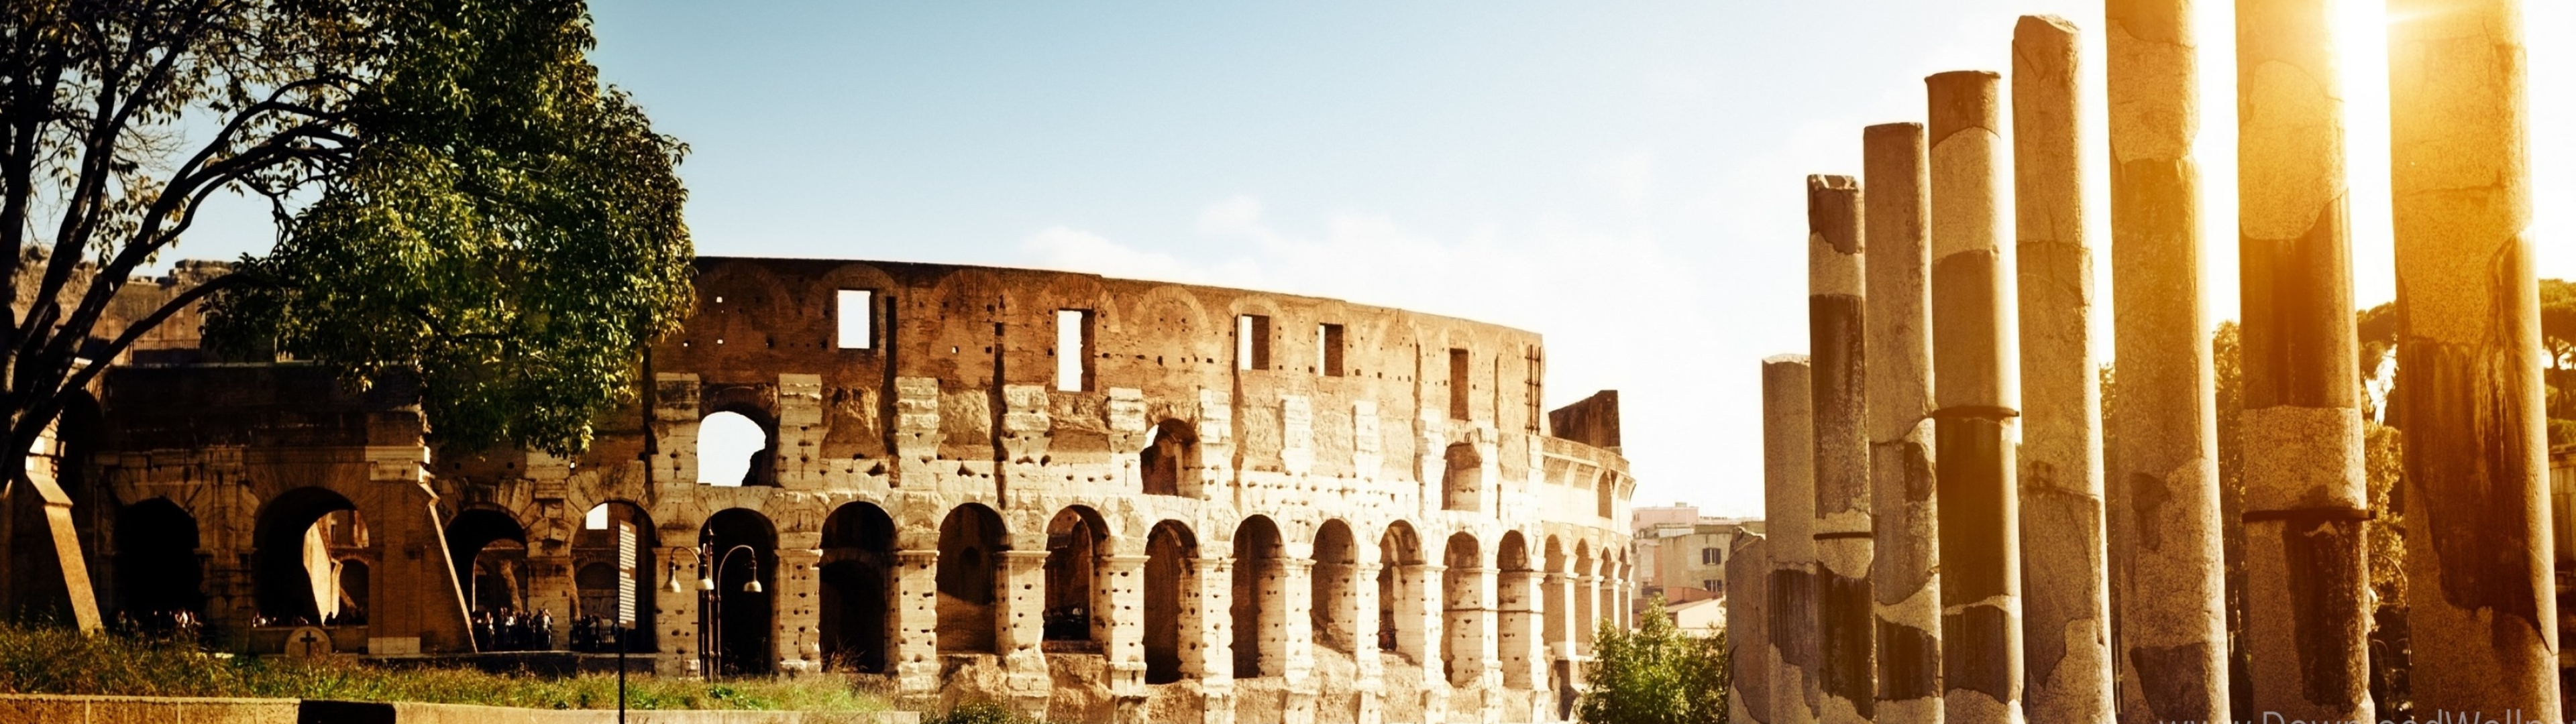 Colosseum wallpaper, Breathtaking view, Rome's beauty, Visual masterpiece, 3840x1080 Dual Screen Desktop